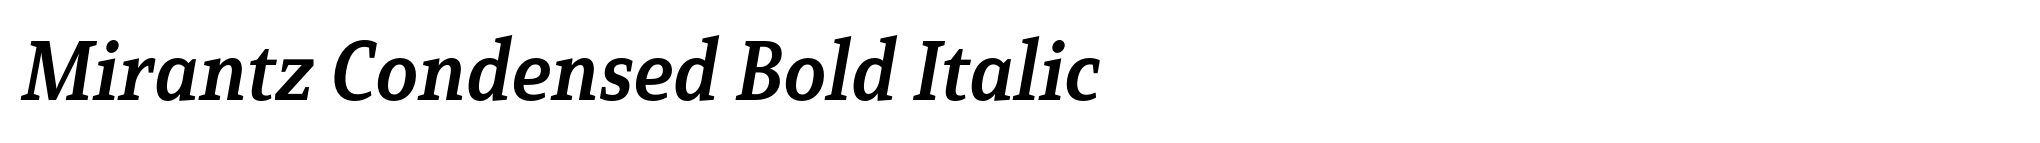 Mirantz Condensed Bold Italic image